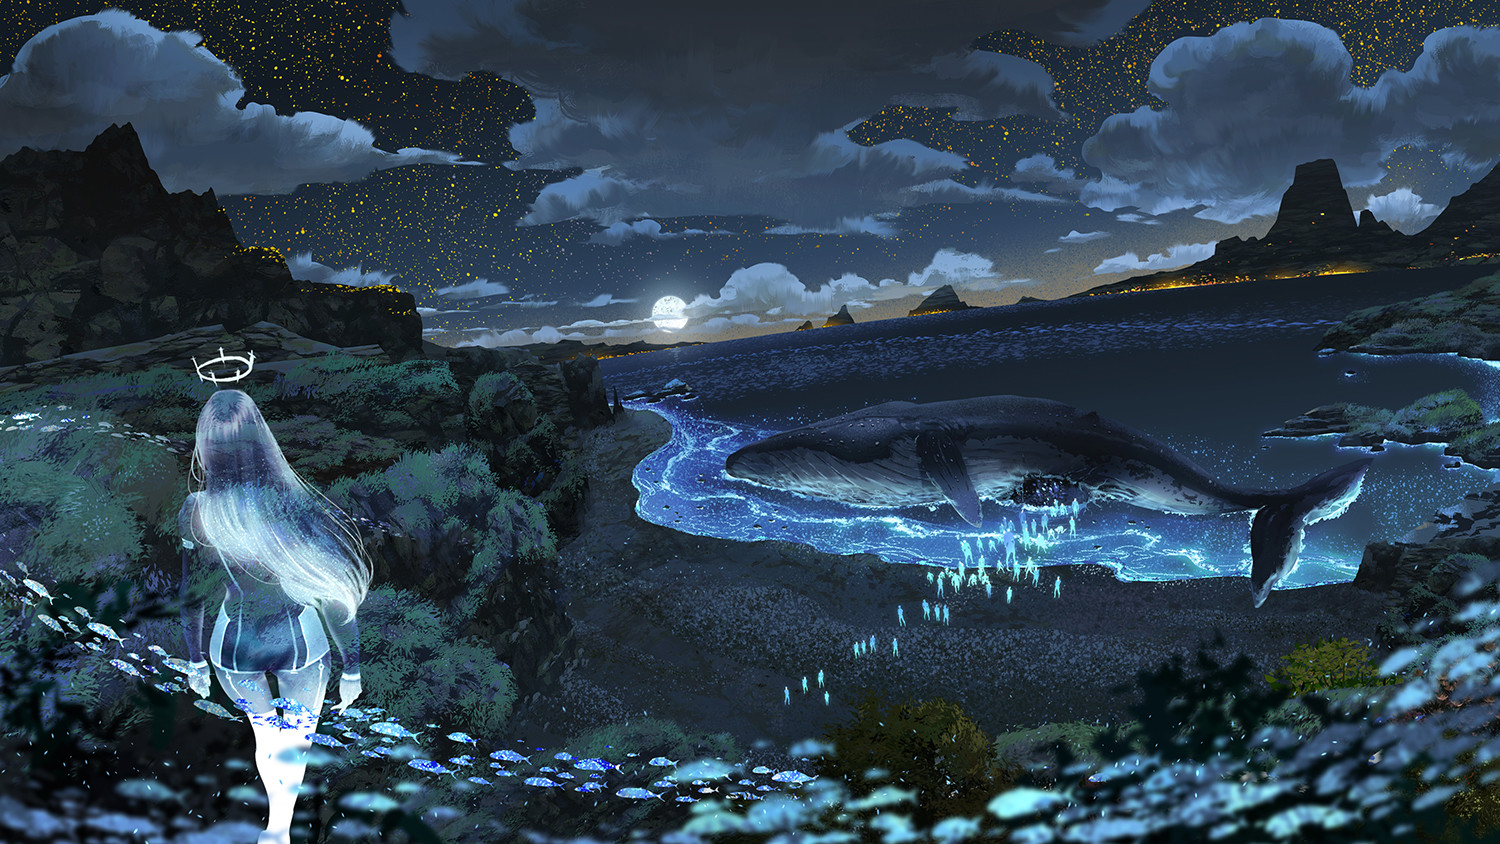 General 1500x844 watermother Jian digital art fantasy art whale beach starry night fish surreal night Moon moonlight crown